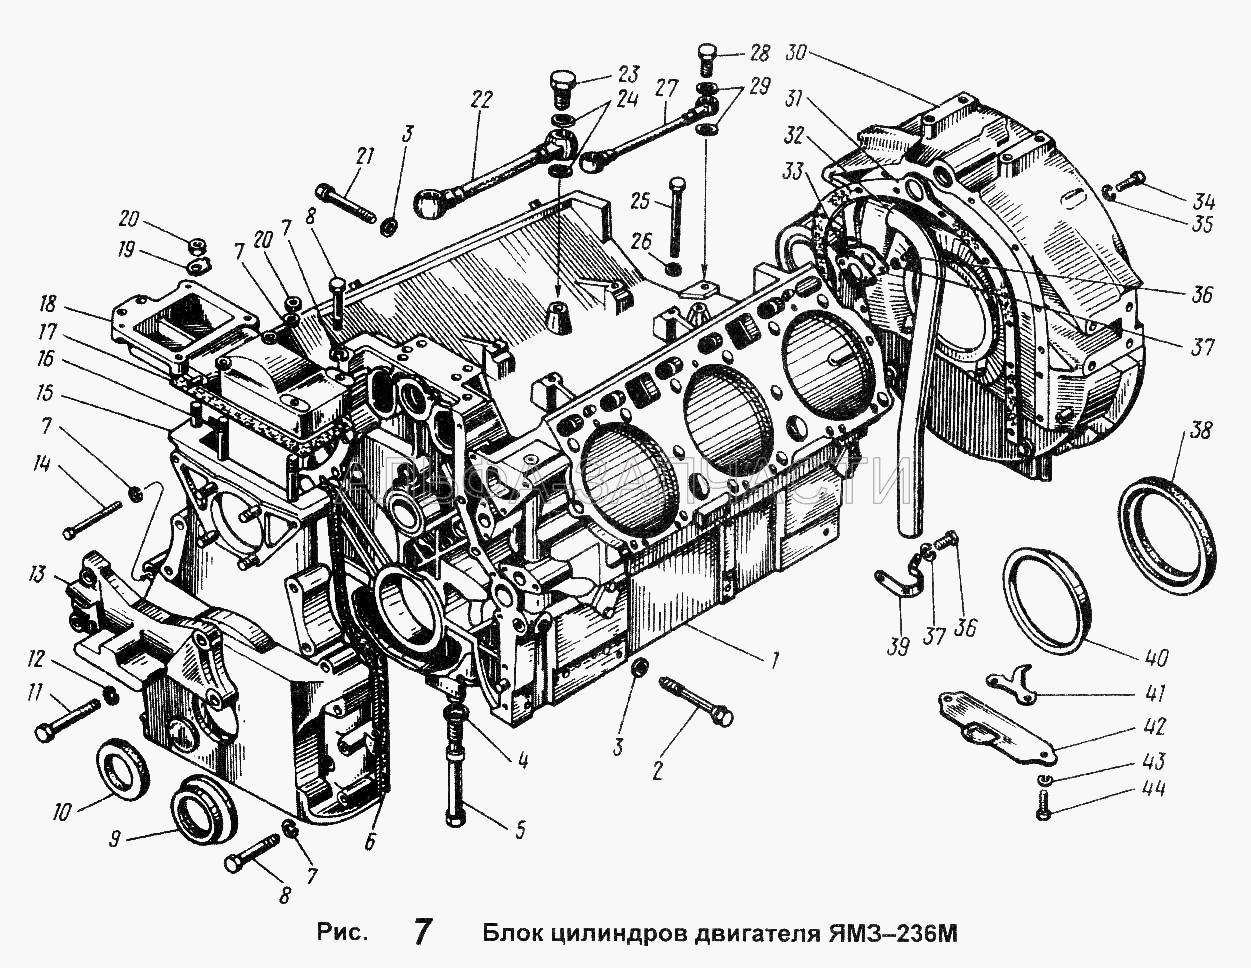 Блок цилиндров двигателя ЯМЗ-236М  